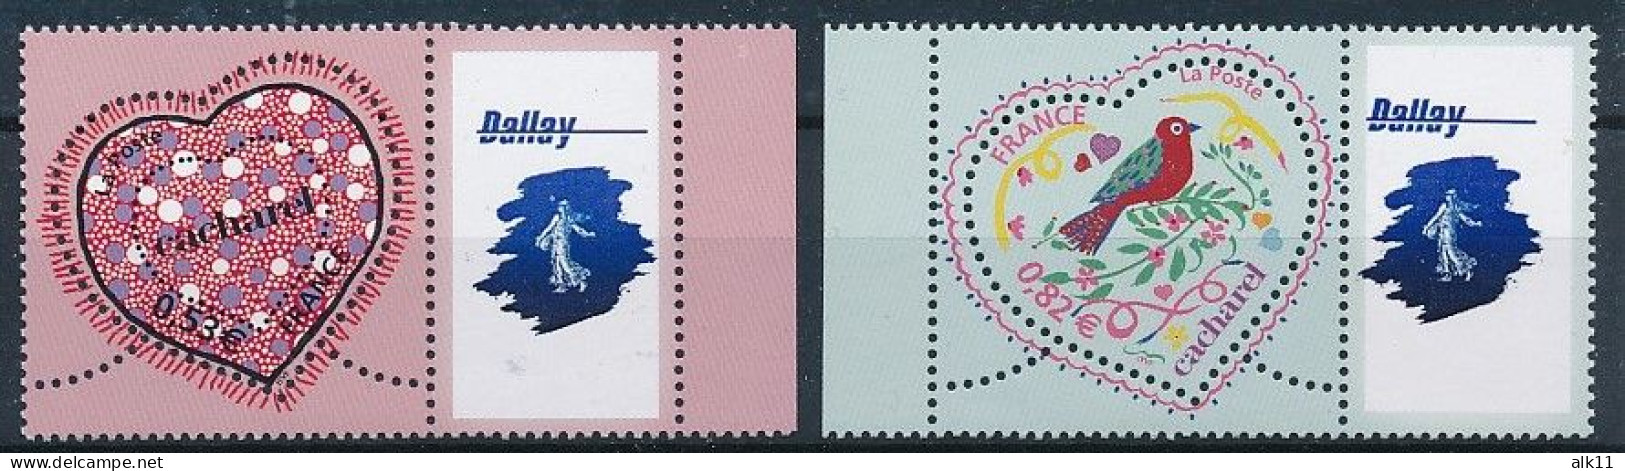 France 2005 - 3747Aa Et 3748Aa Deux Timbres Personnalisés Logo Dallay Saint-Valentin - Neuf - Unused Stamps